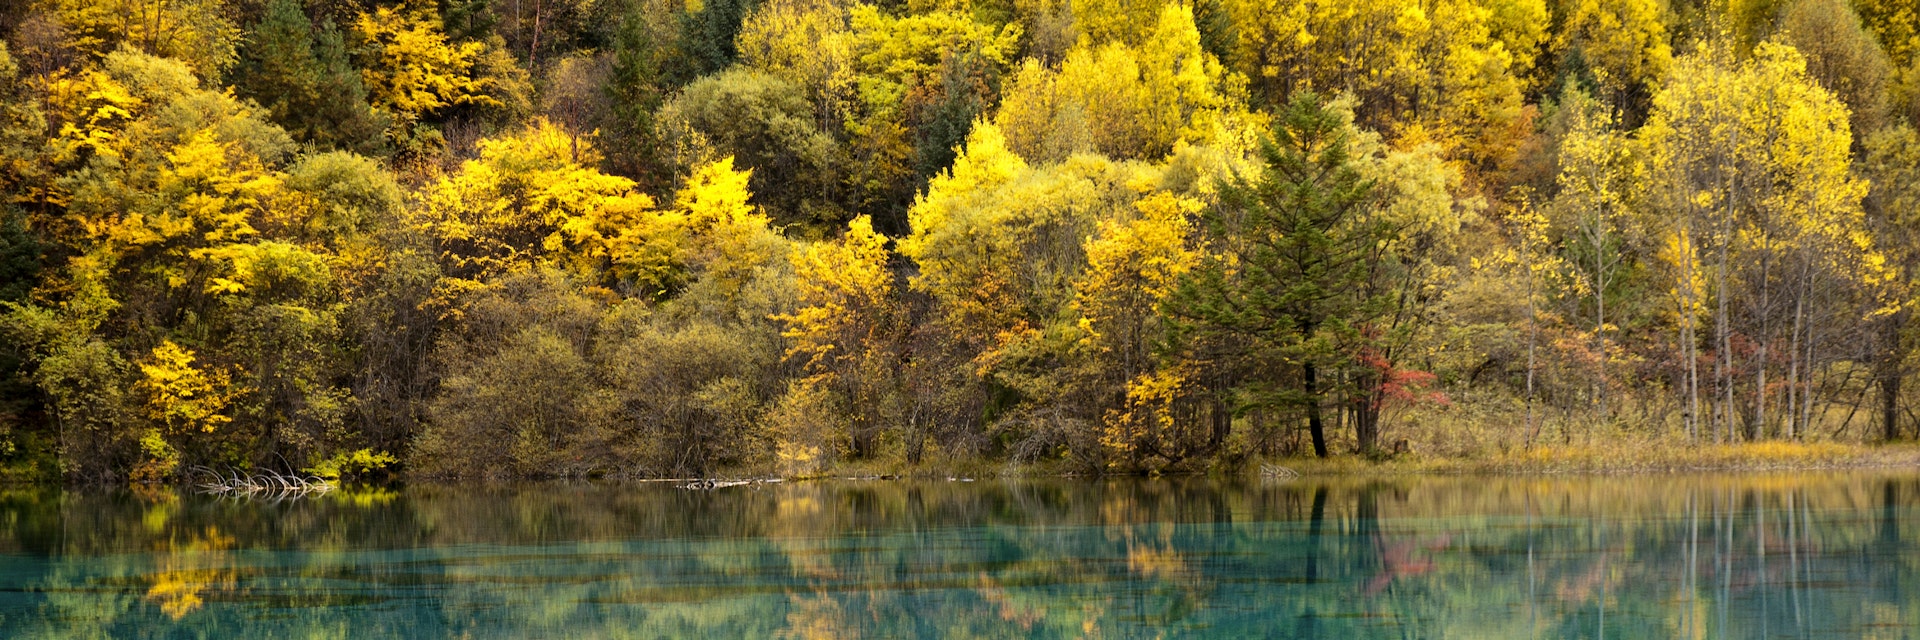 Autumn reflection in lake wuhuahai in jiuzhaigou